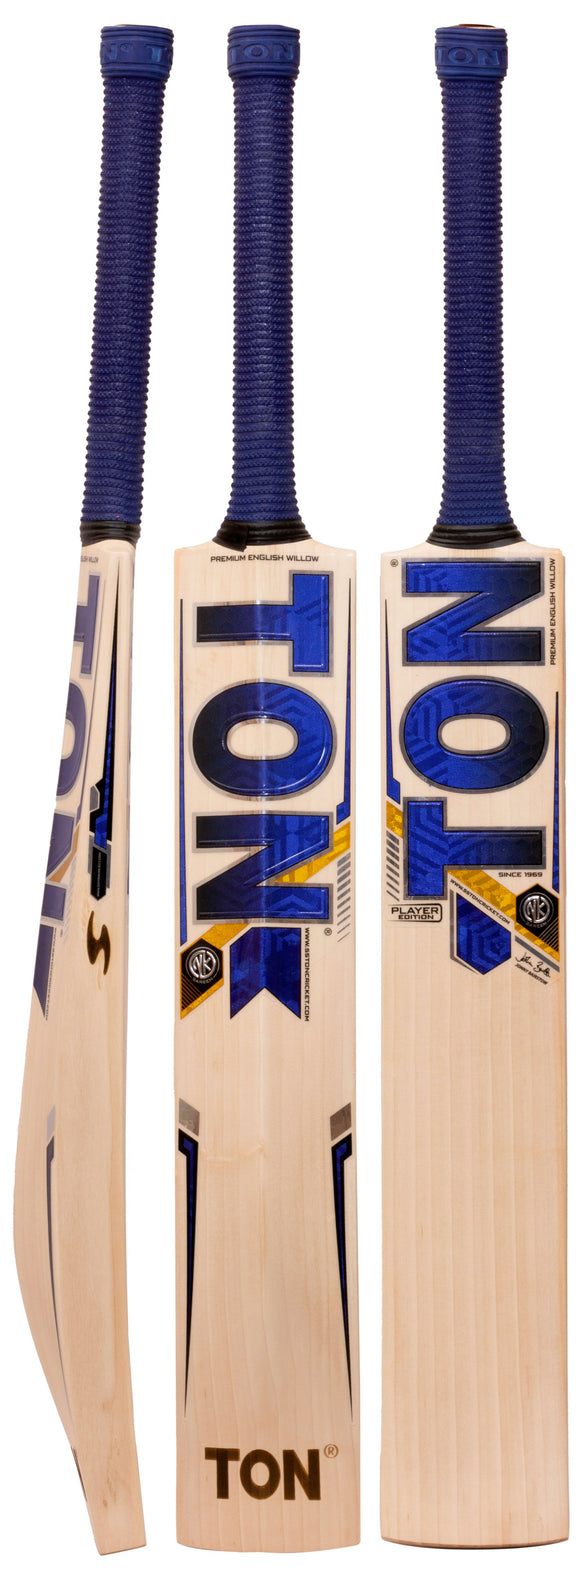 Ton Player Edition Cricket Bat